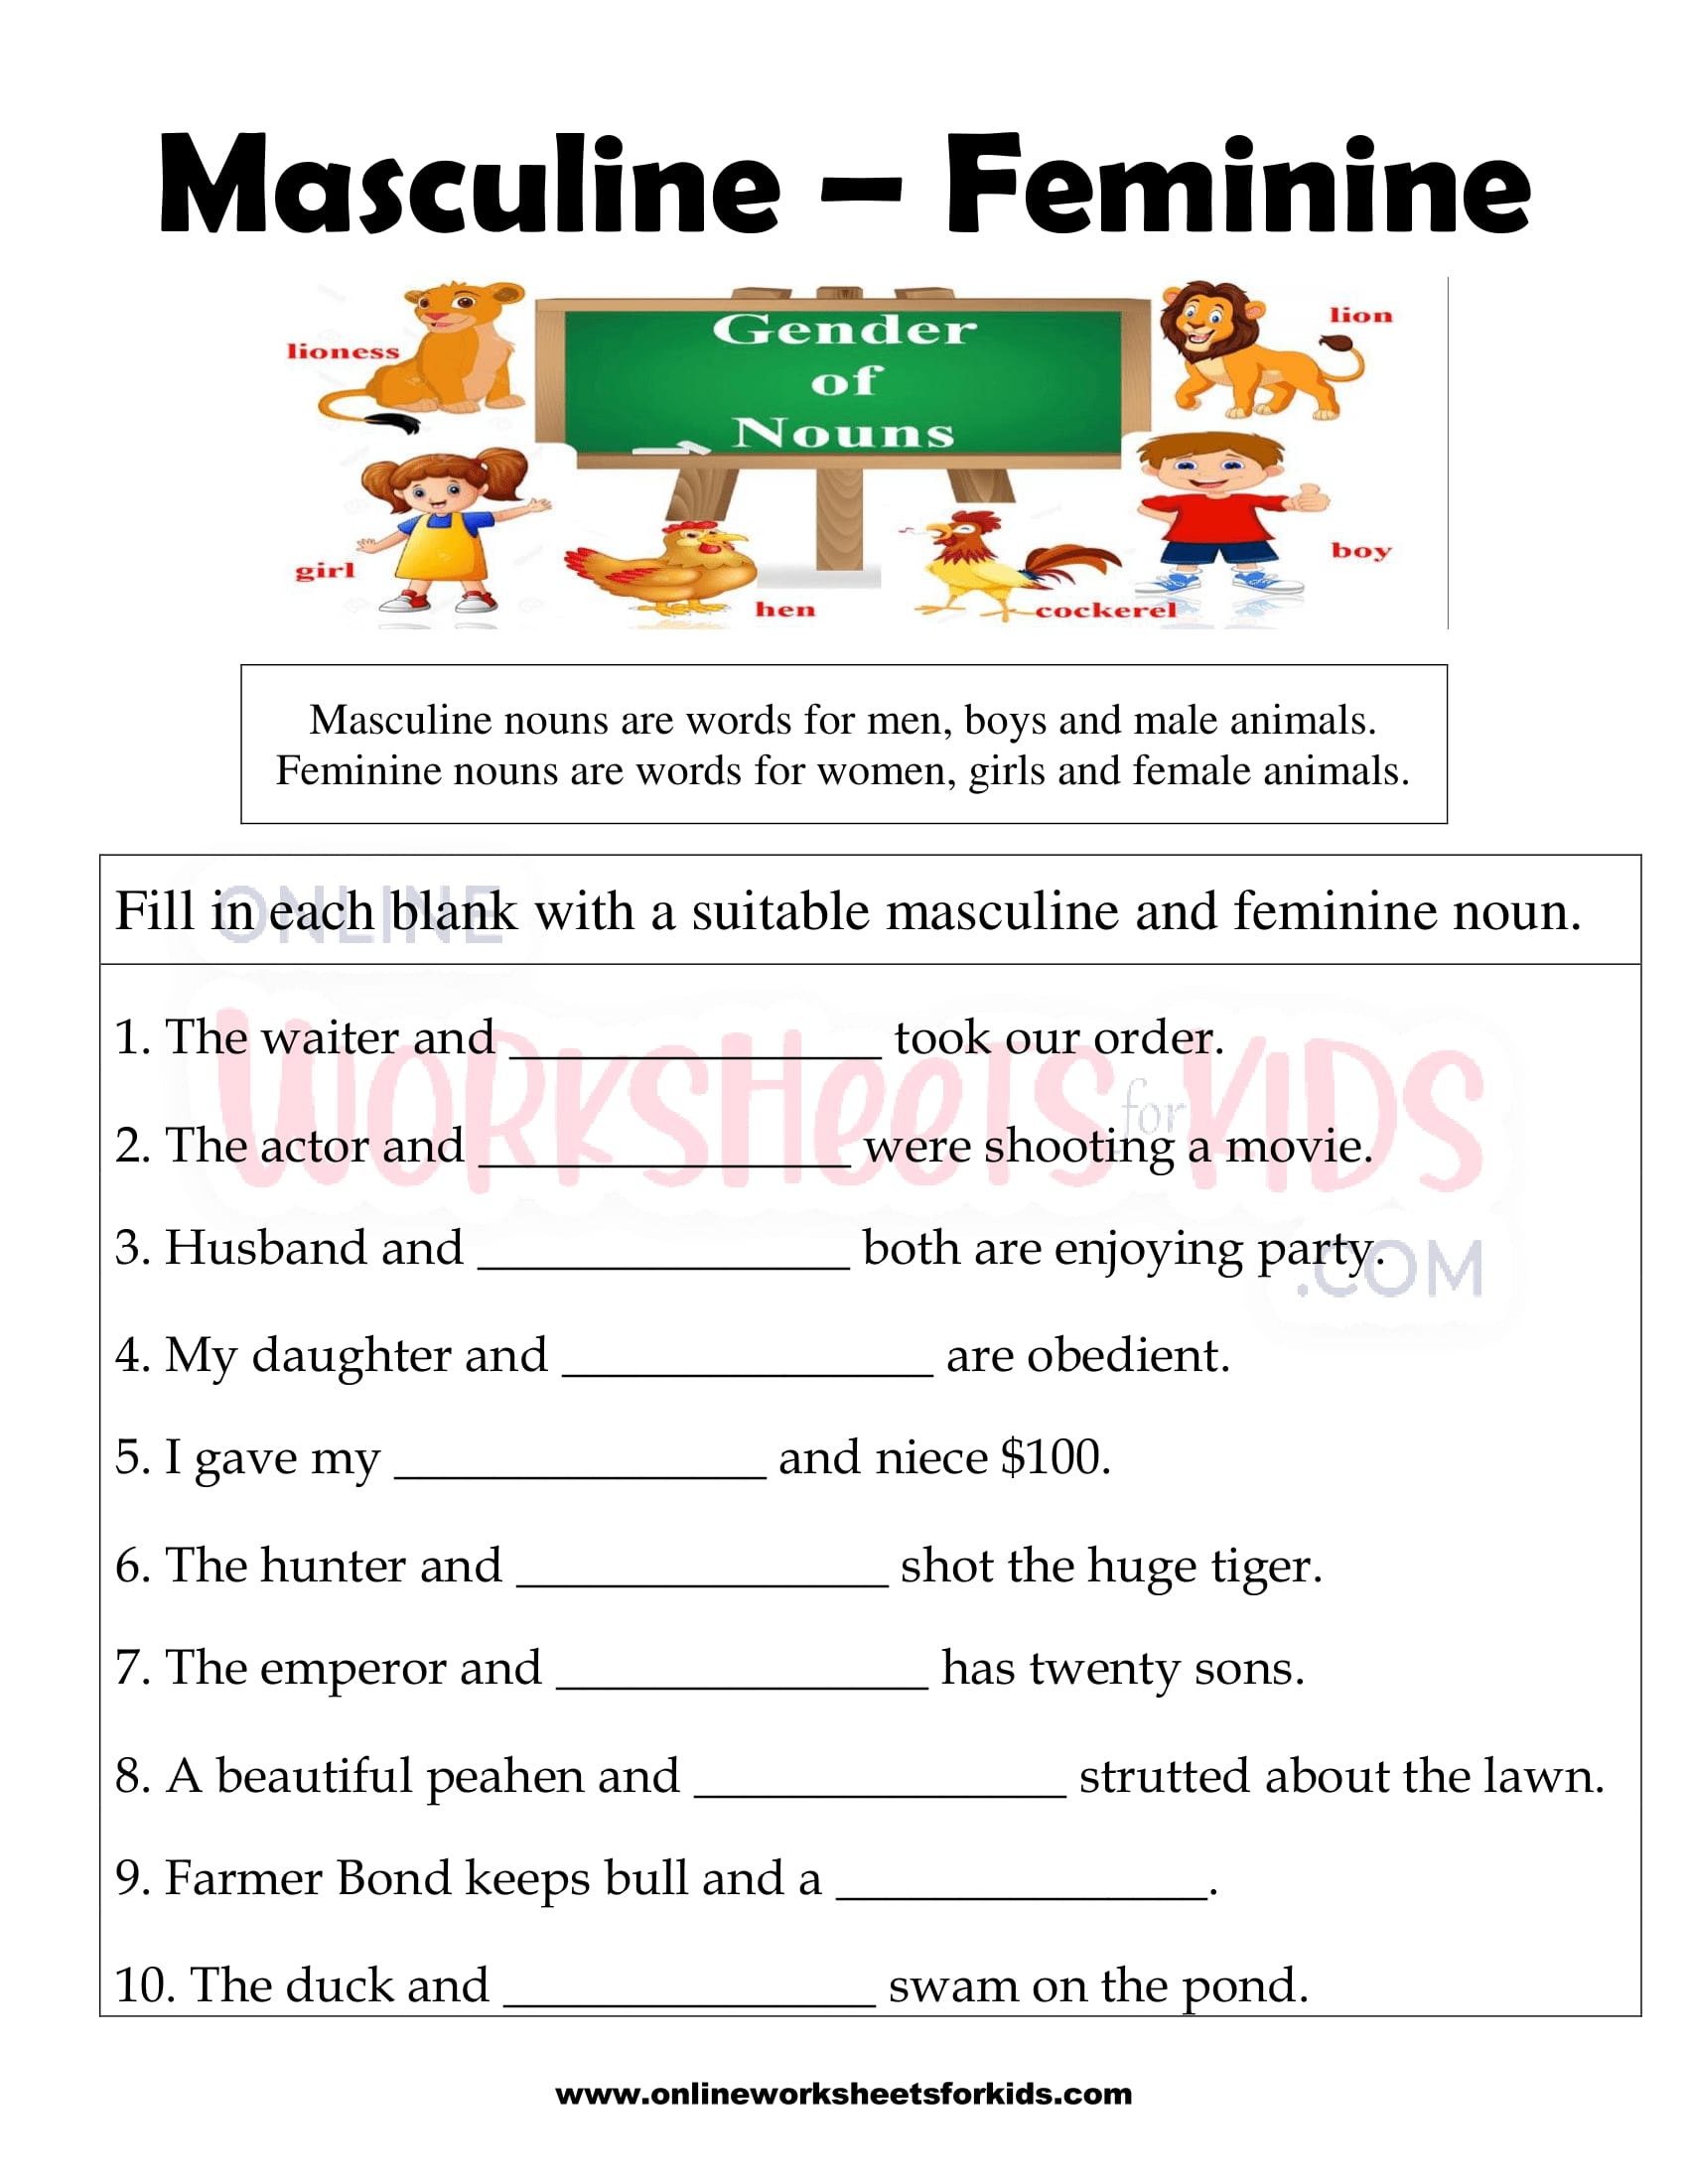 gender-nouns-worksheet-gender-of-nouns-worksheet-milaxyhealy43f